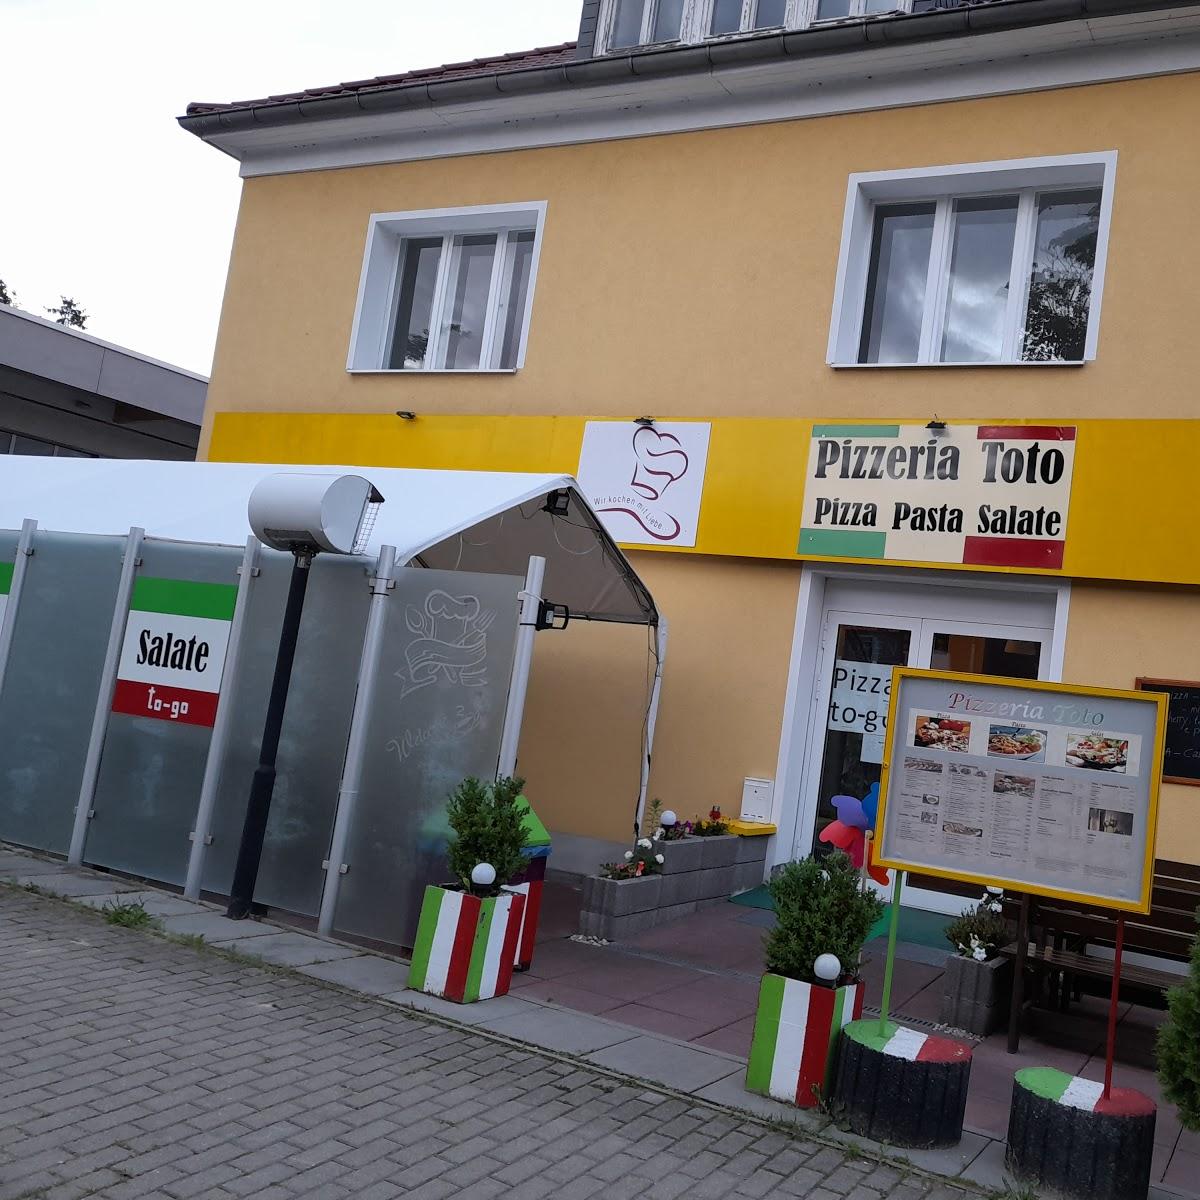 Restaurant "Pizzeria Toto" in Dallgow-Döberitz